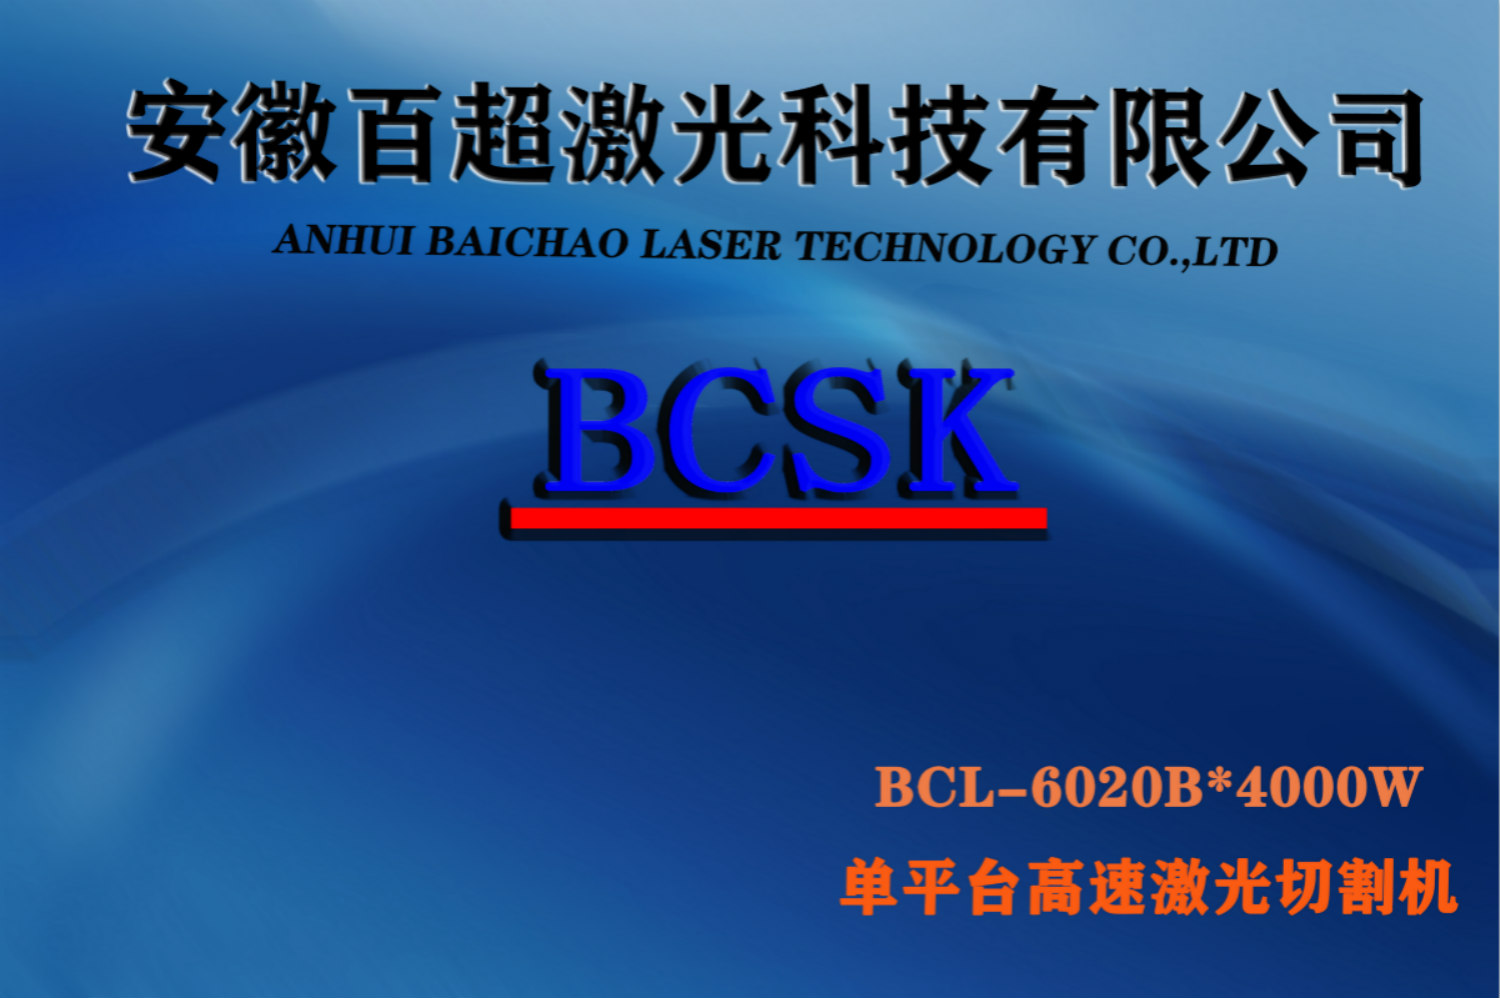 BCL-6020B Single platform high speed fiber cutting machine